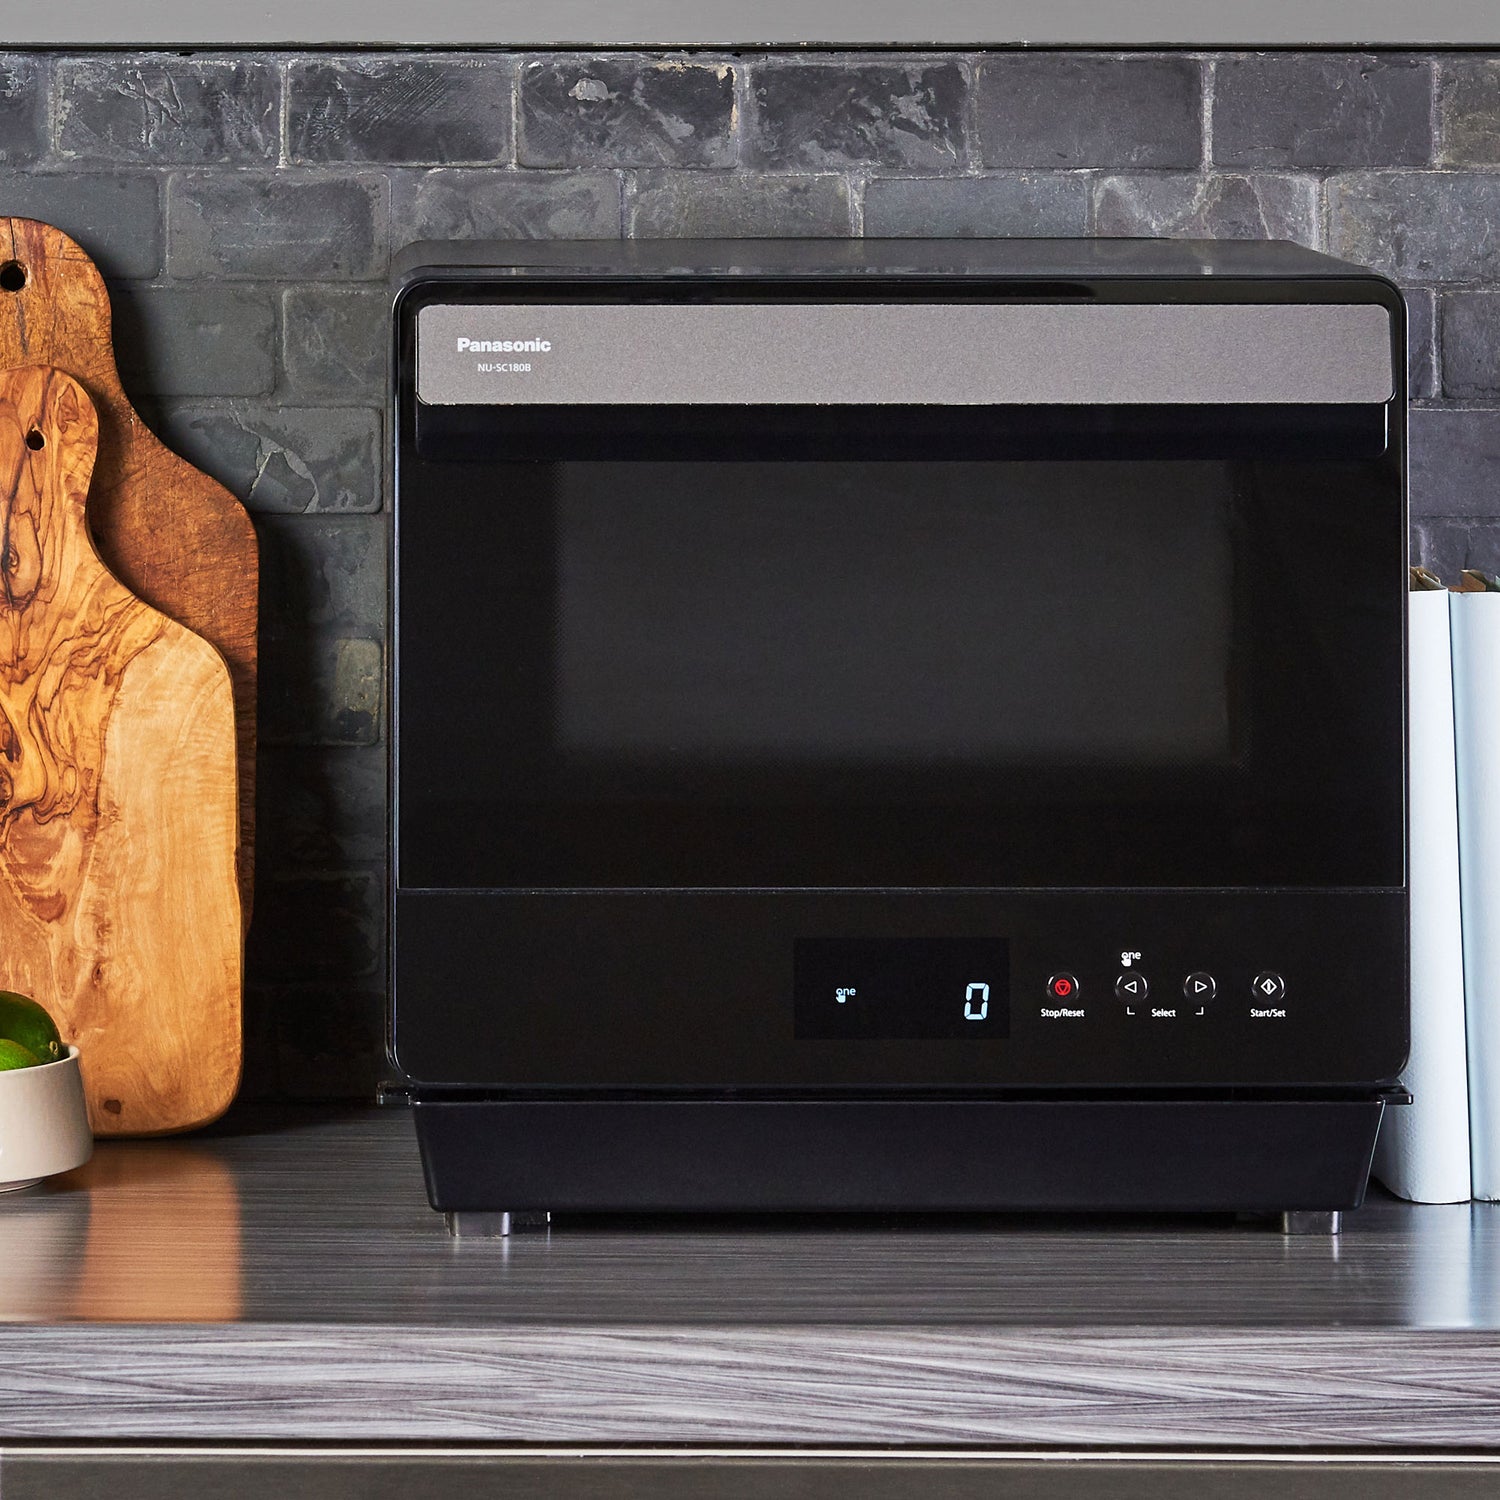 Panasonic HomeChef seven in one multi-oven on dark kitchen counter